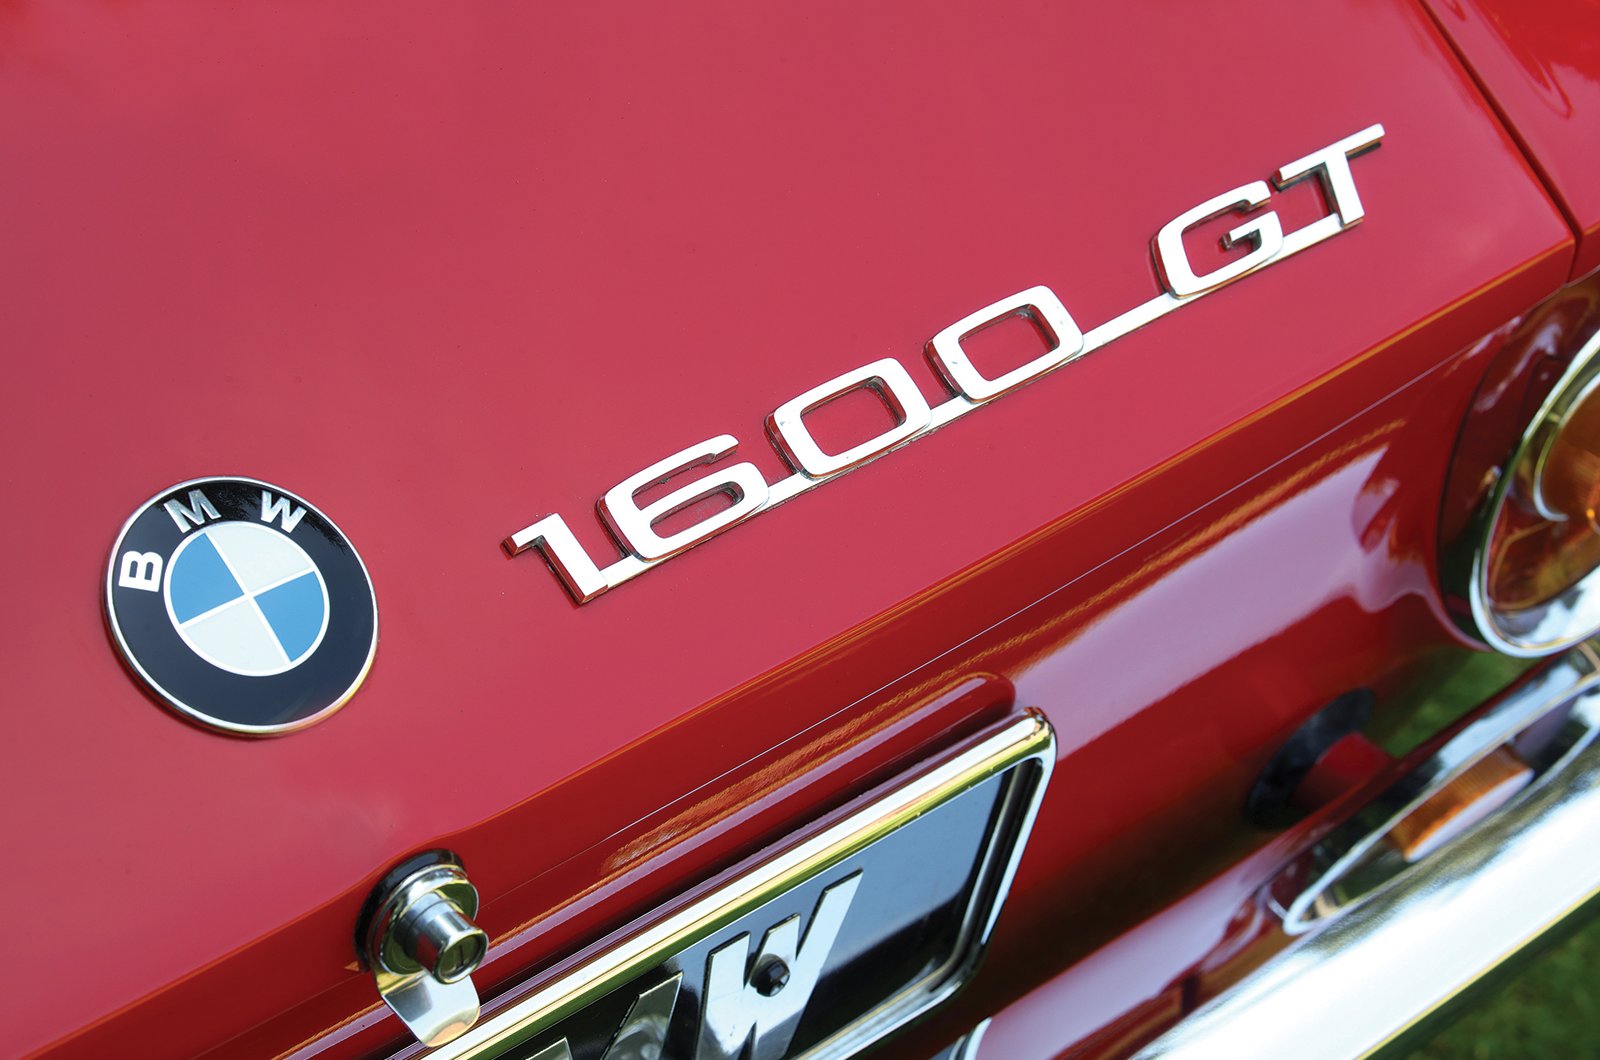 Classic & Sports Car – Glas 2600 V8 vs BMW-Glas 1600 GT: Frua’s German oddities